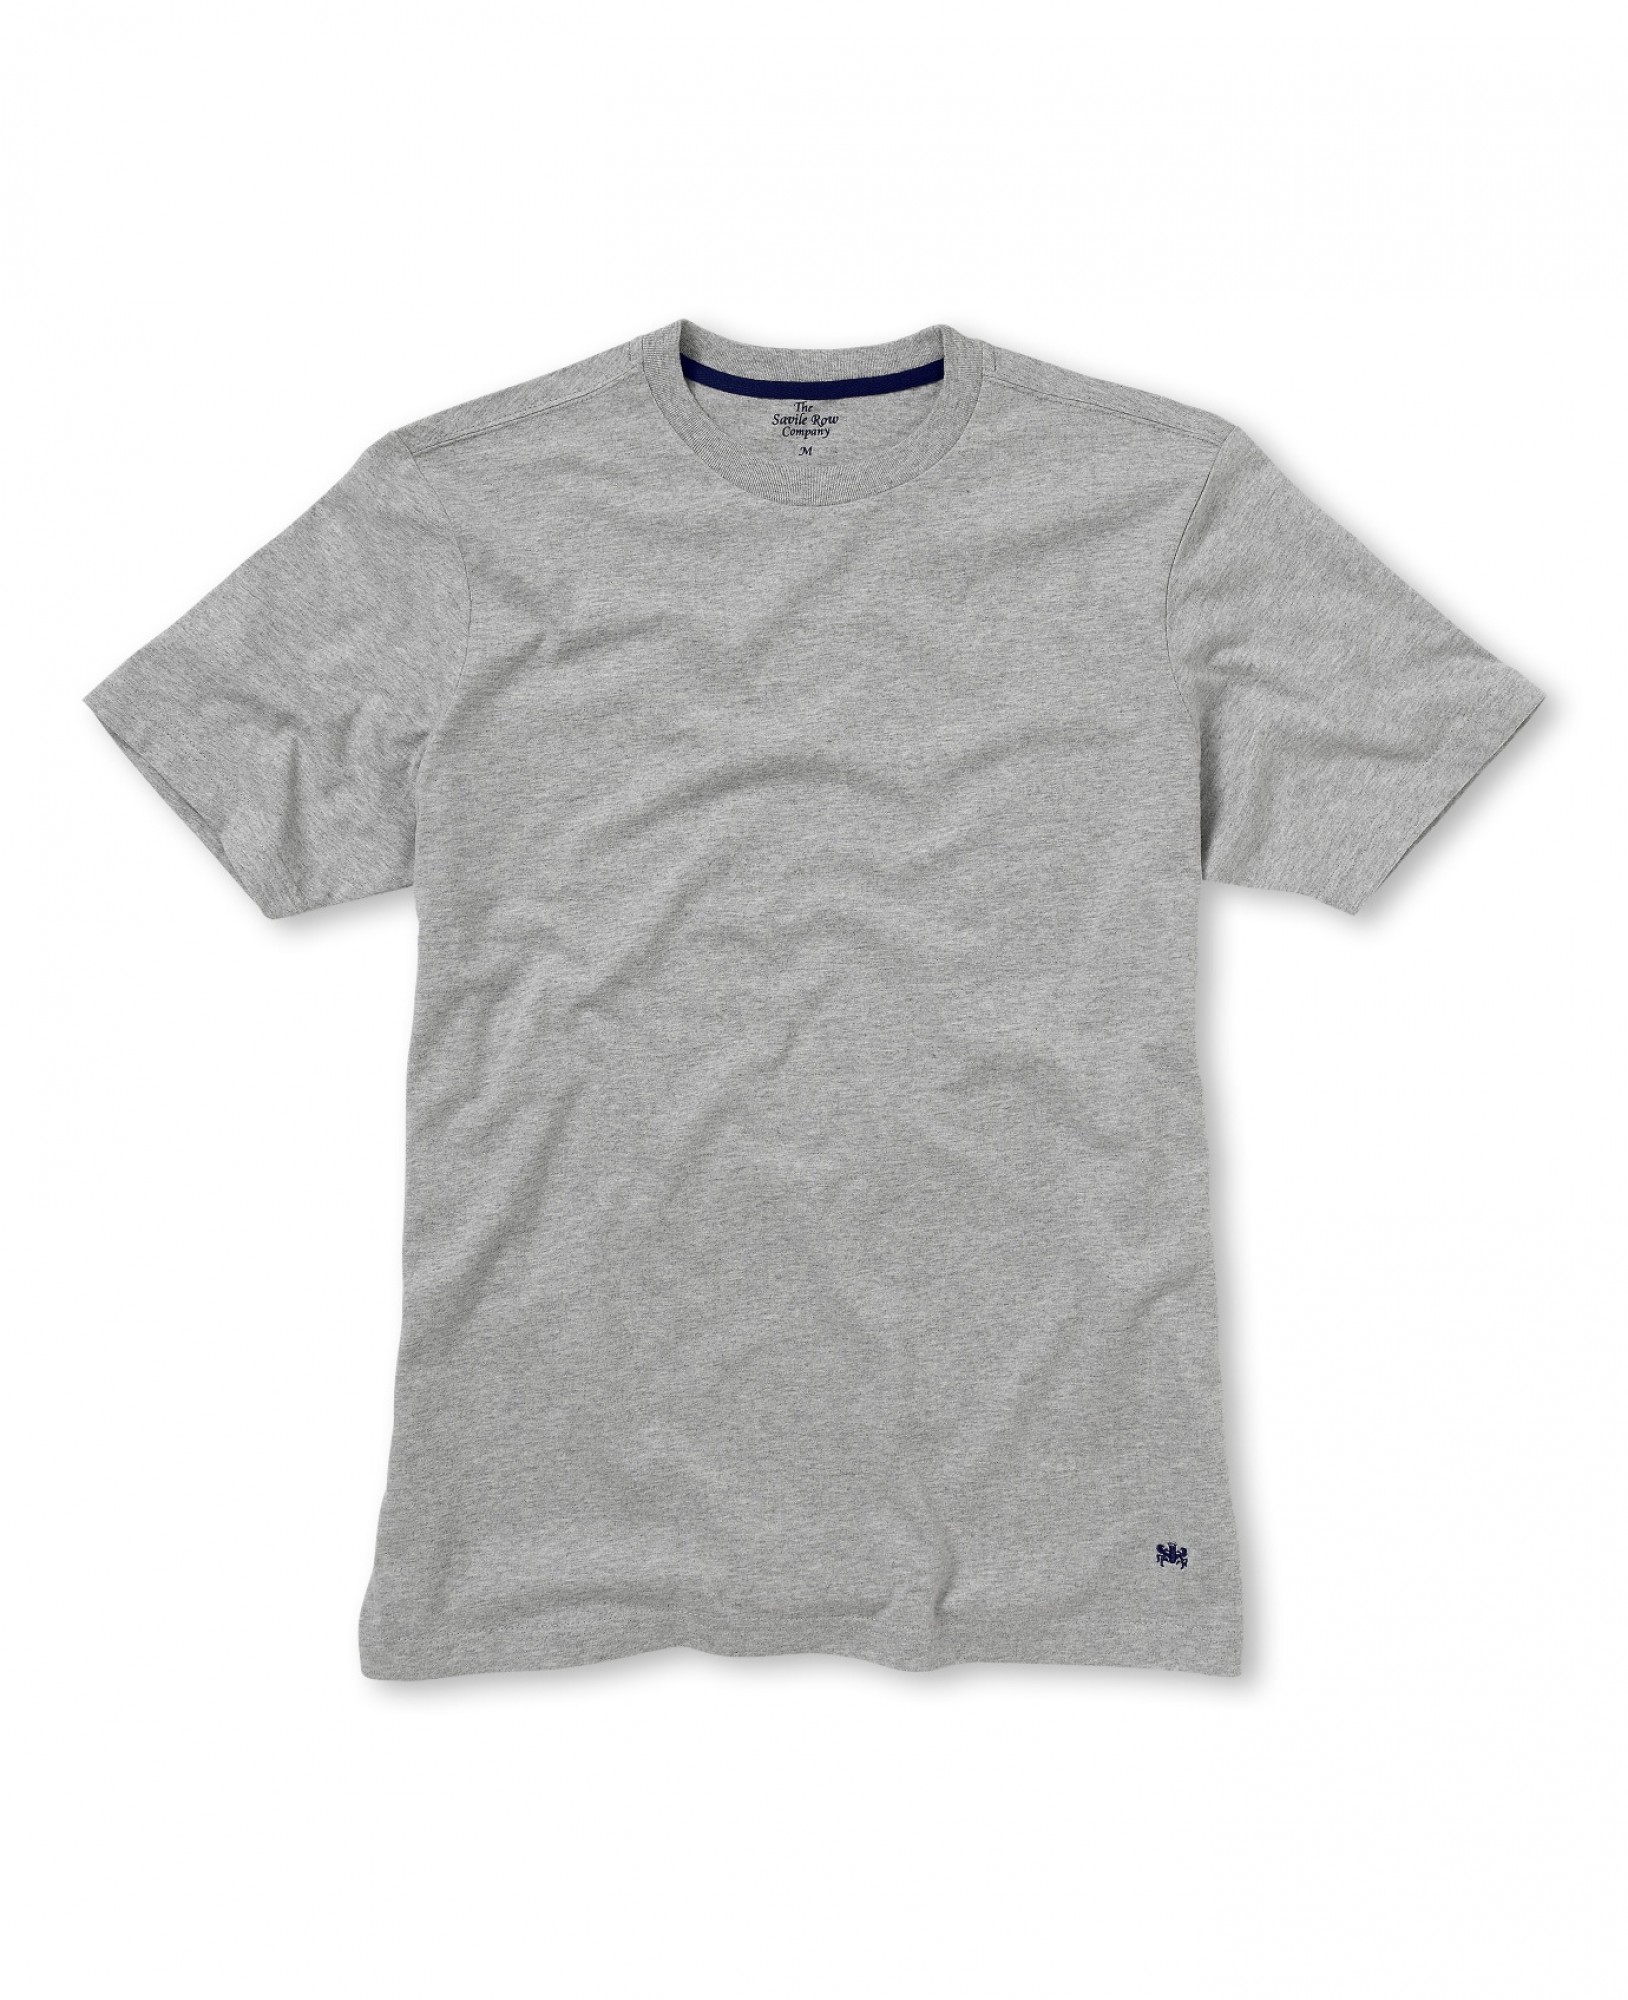 Savile Row Co. Grey Short Sleeve T-Shirt M